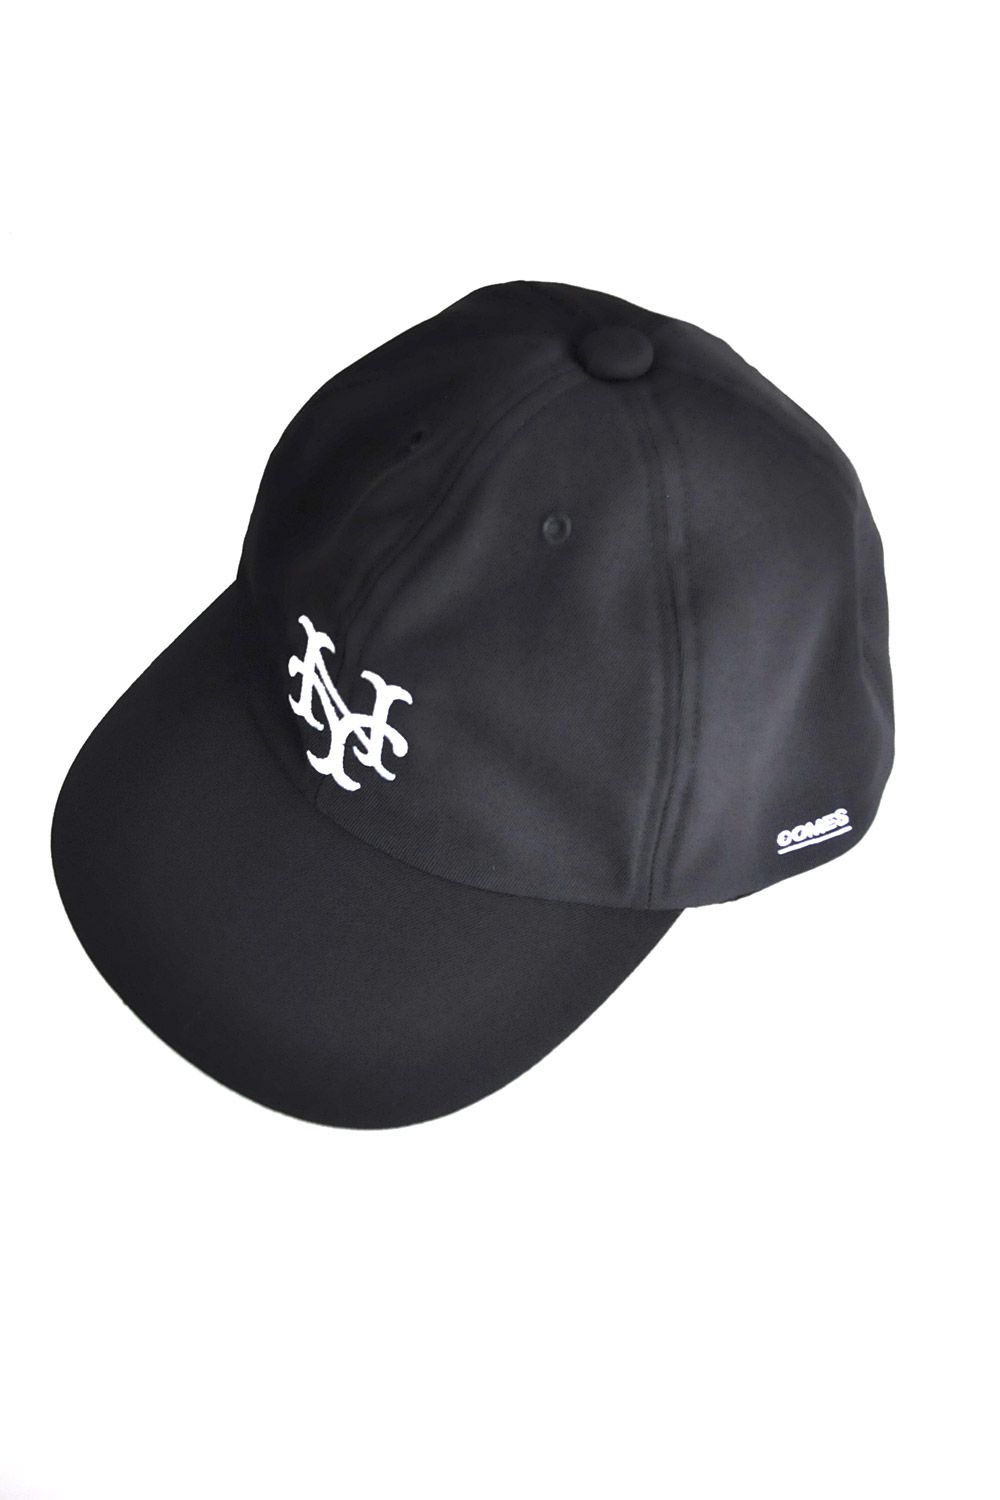 COMESANDGOES - NY CUBANS CAP (No.24008) / BLACK | Stripe Online Store